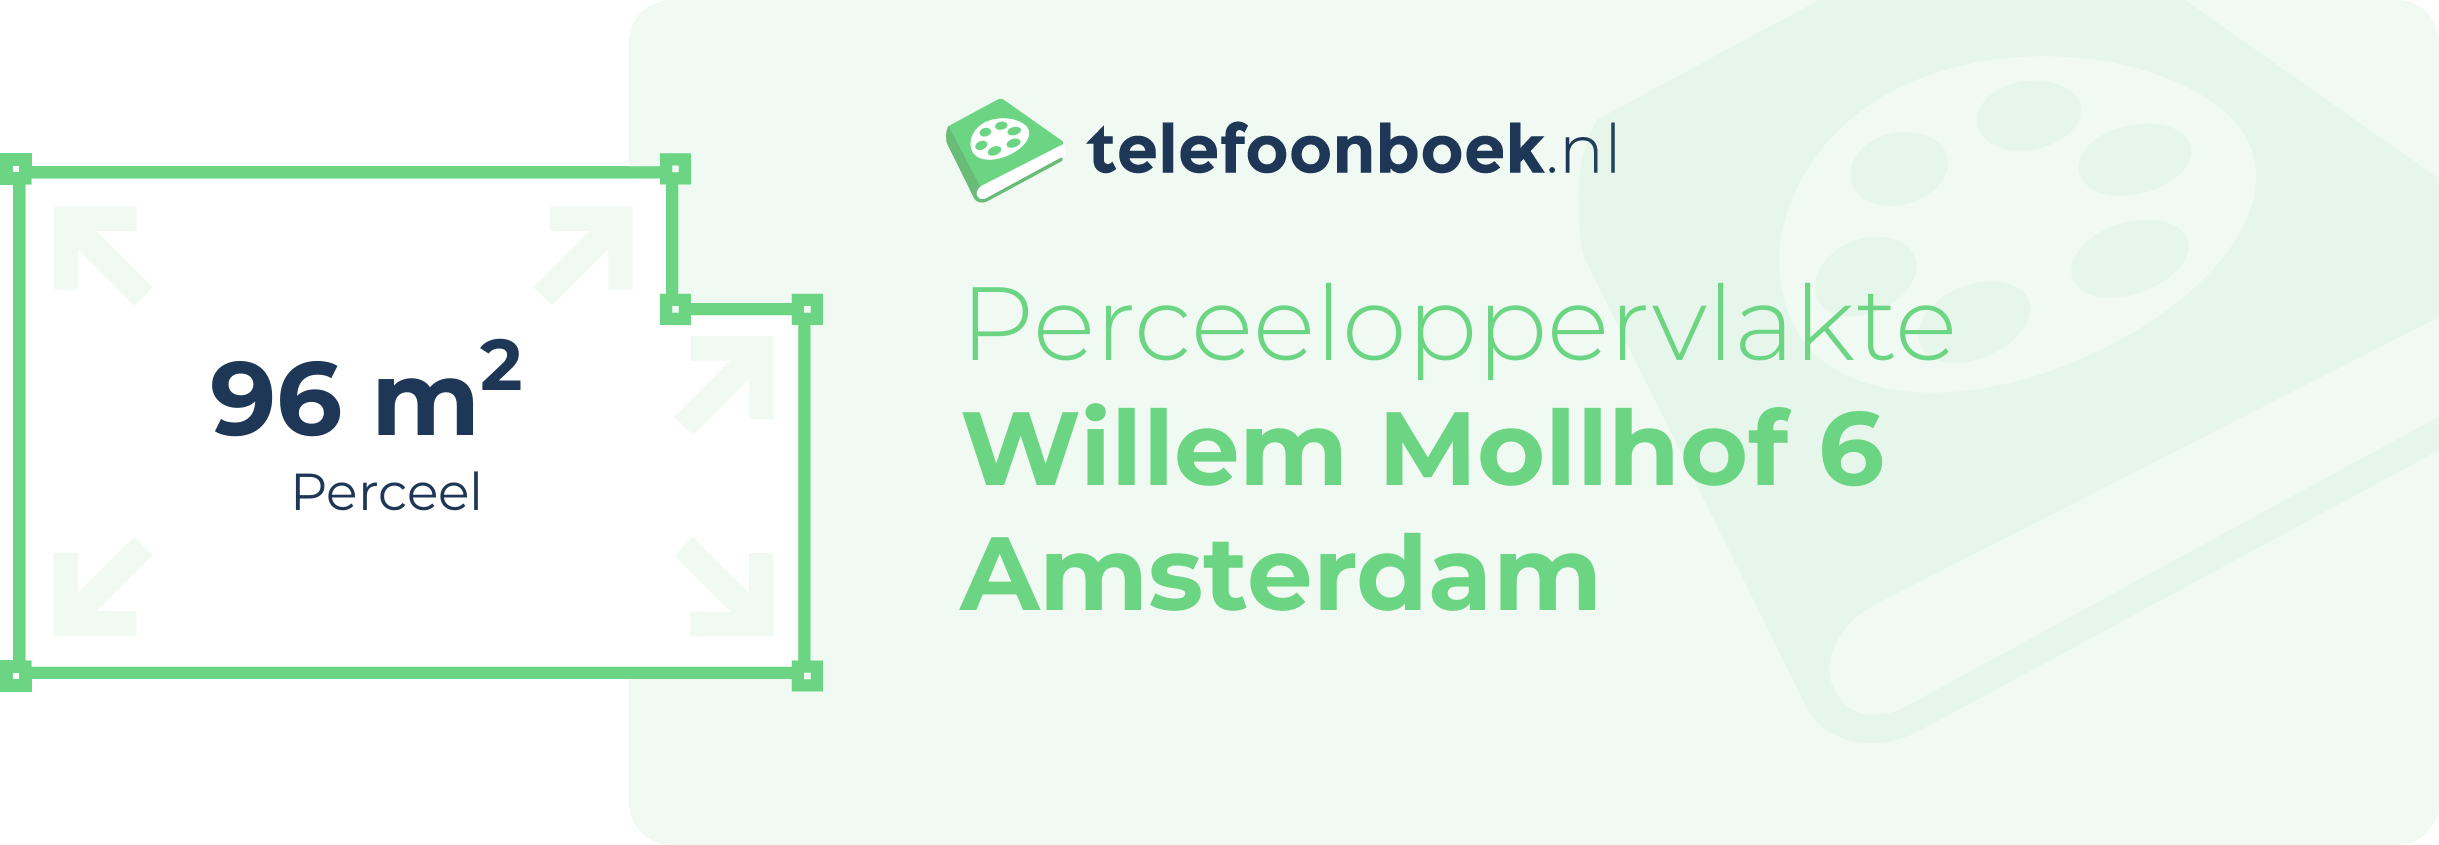 Perceeloppervlakte Willem Mollhof 6 Amsterdam